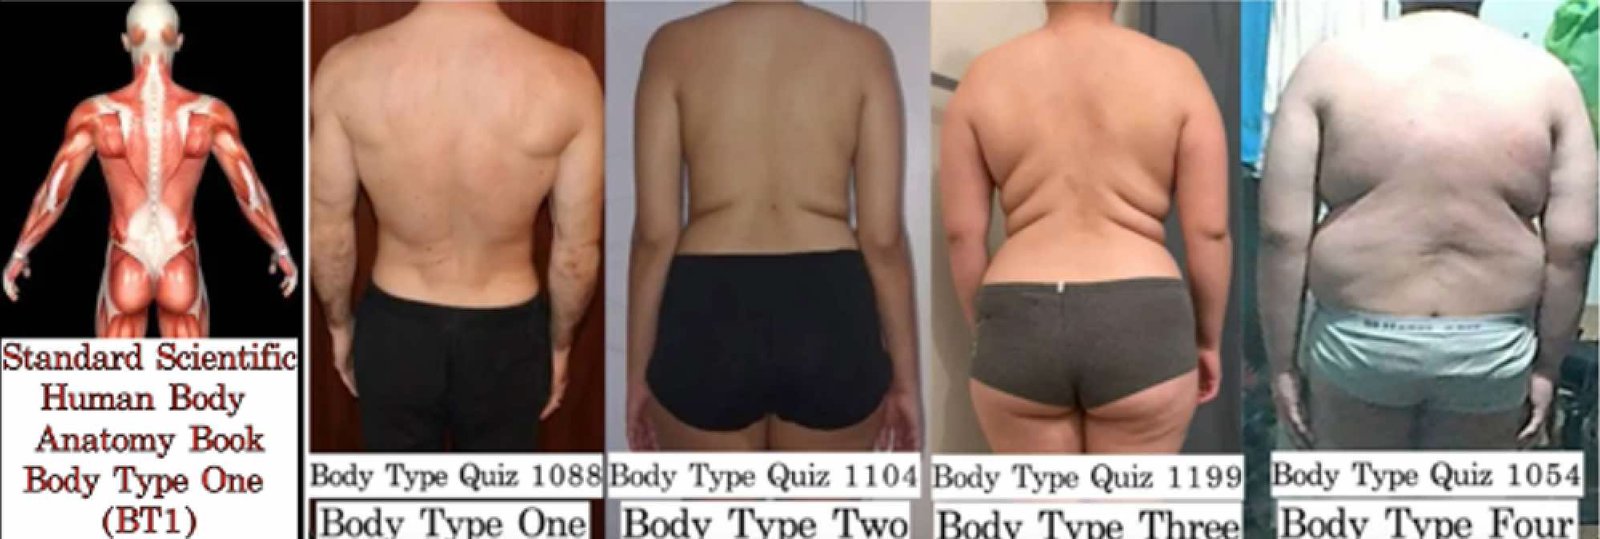 Free Scientific Body Type Quiz, The Four Body Types - Standard Body Type One, Body Type Two, Body Type Three, Body Type Four